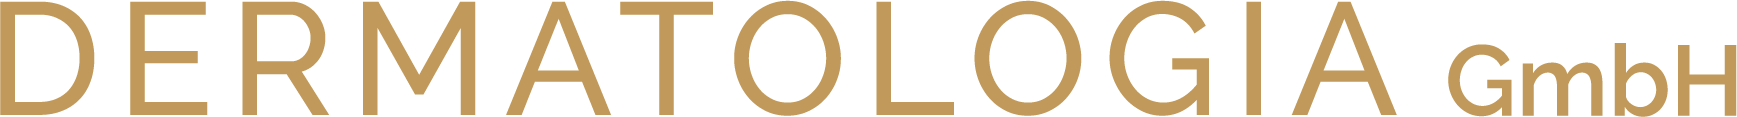 dermatologia-logo